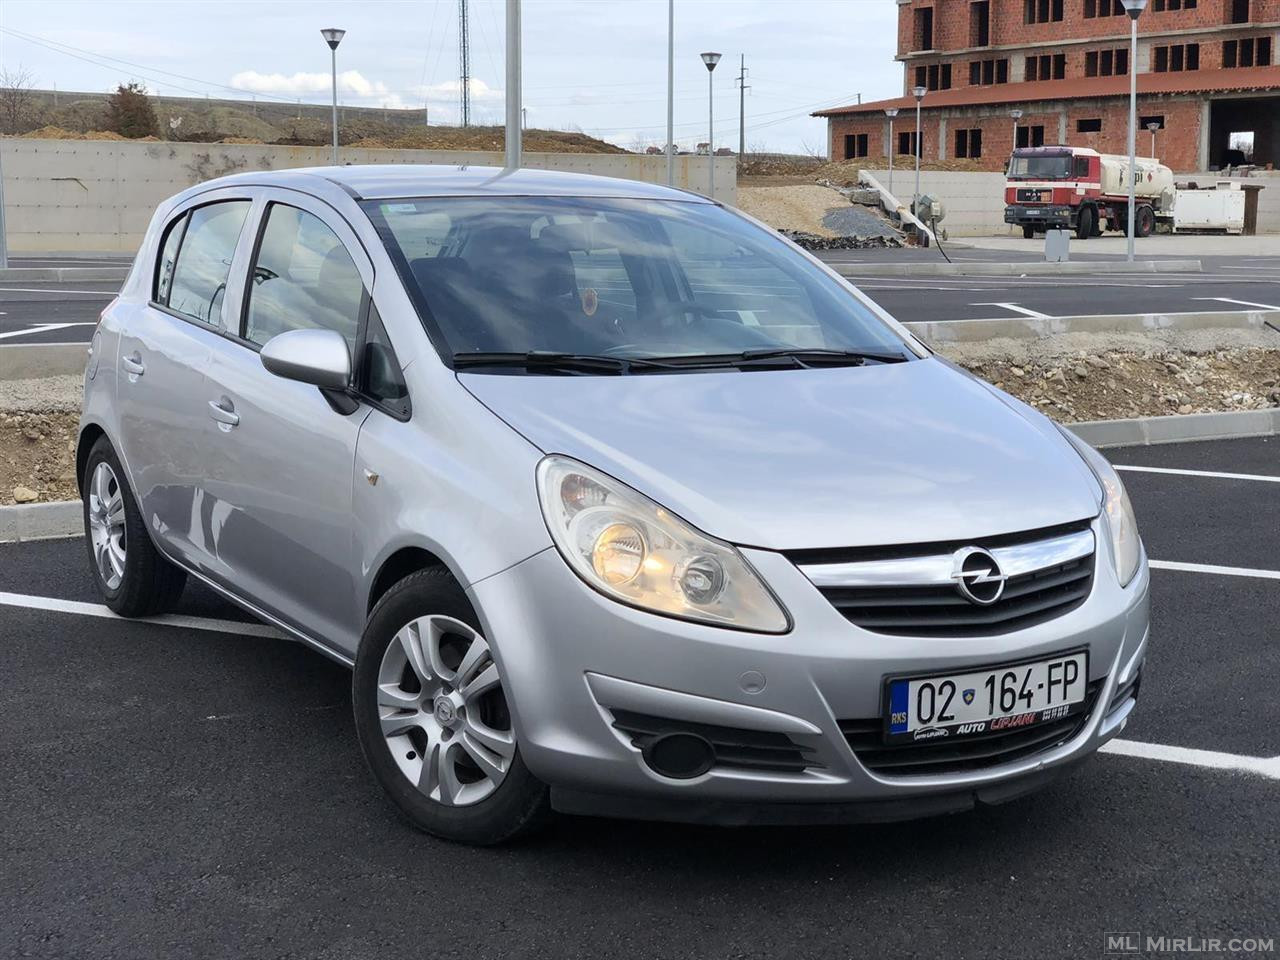 Opel Korsa 1.3 Cdti 2009